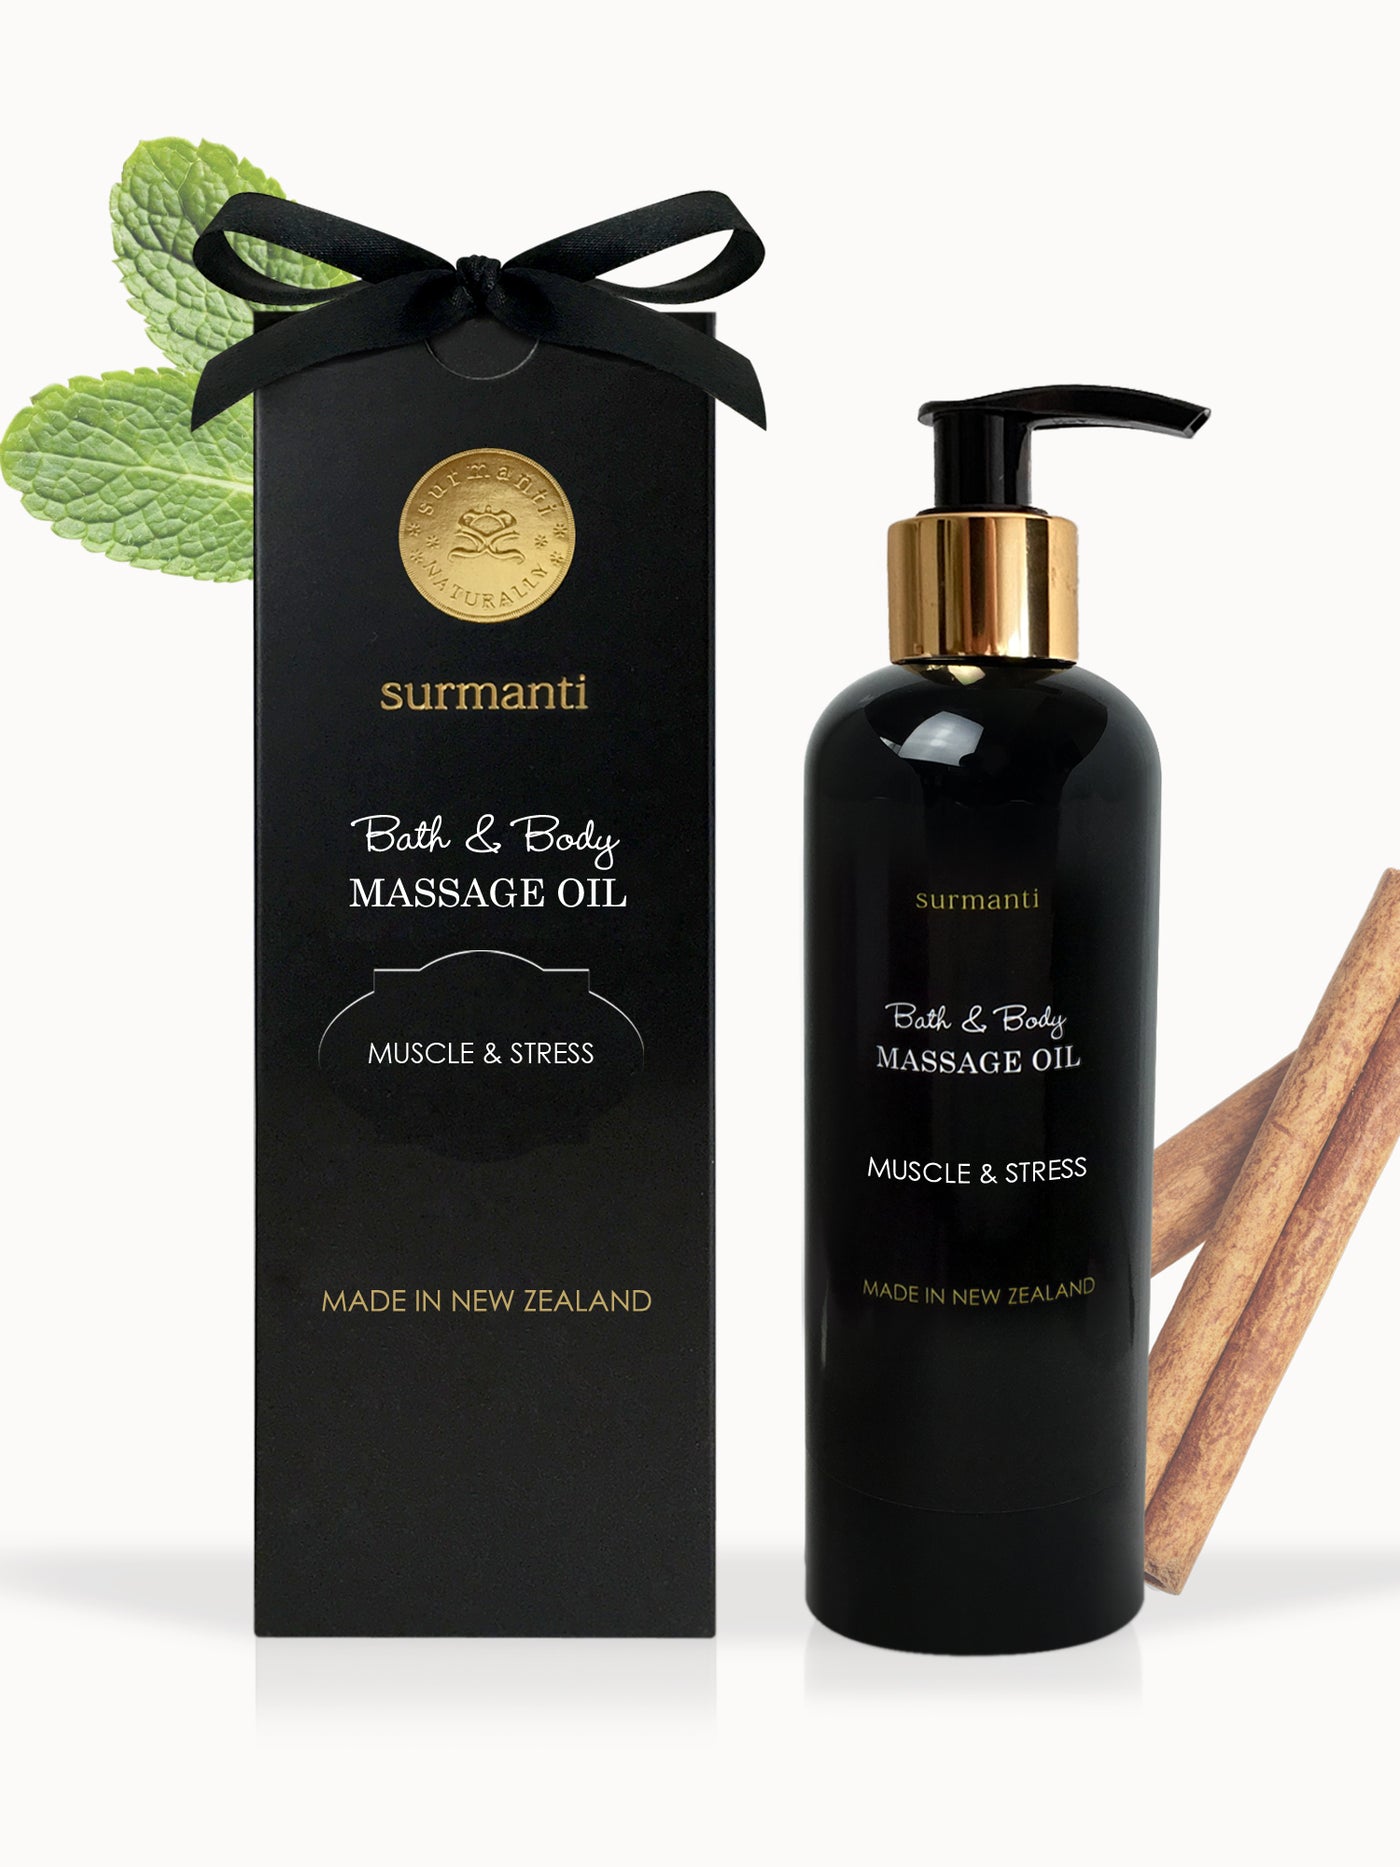 Muscle & Stress Bath & Body Massage Oil - Surmanti - Made In New Zealand